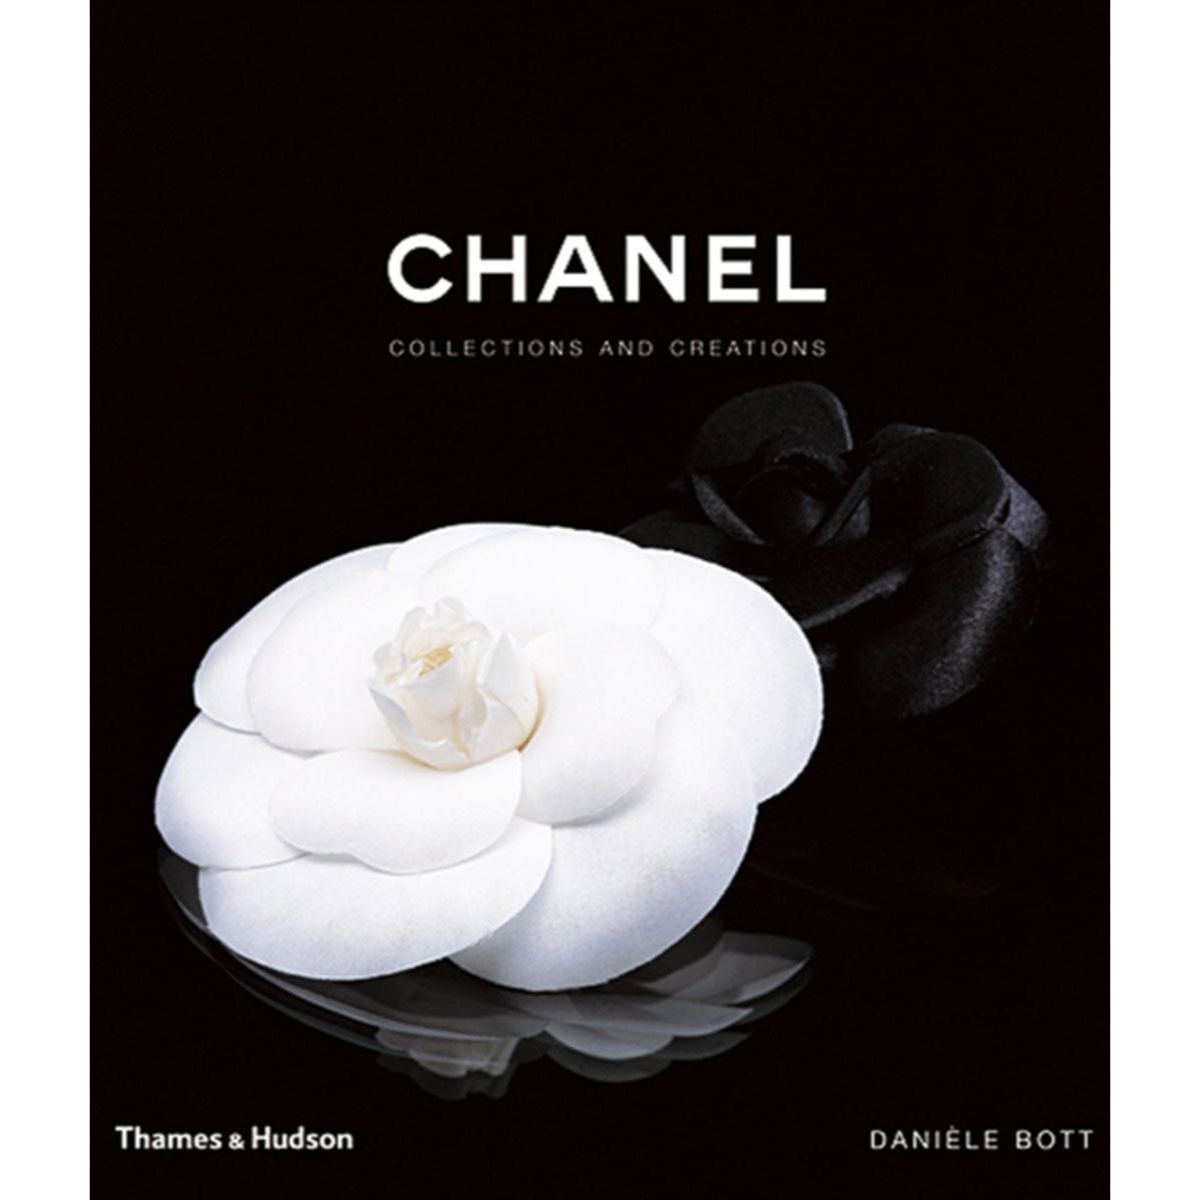 Hintsdeco Books Βιβλίο Τέχνης Βιβλίο Τεχνης, Fashion, Chanel Collection and Creations, Μαύρο, 25×2,5×28,5 cm, Hintsdeco